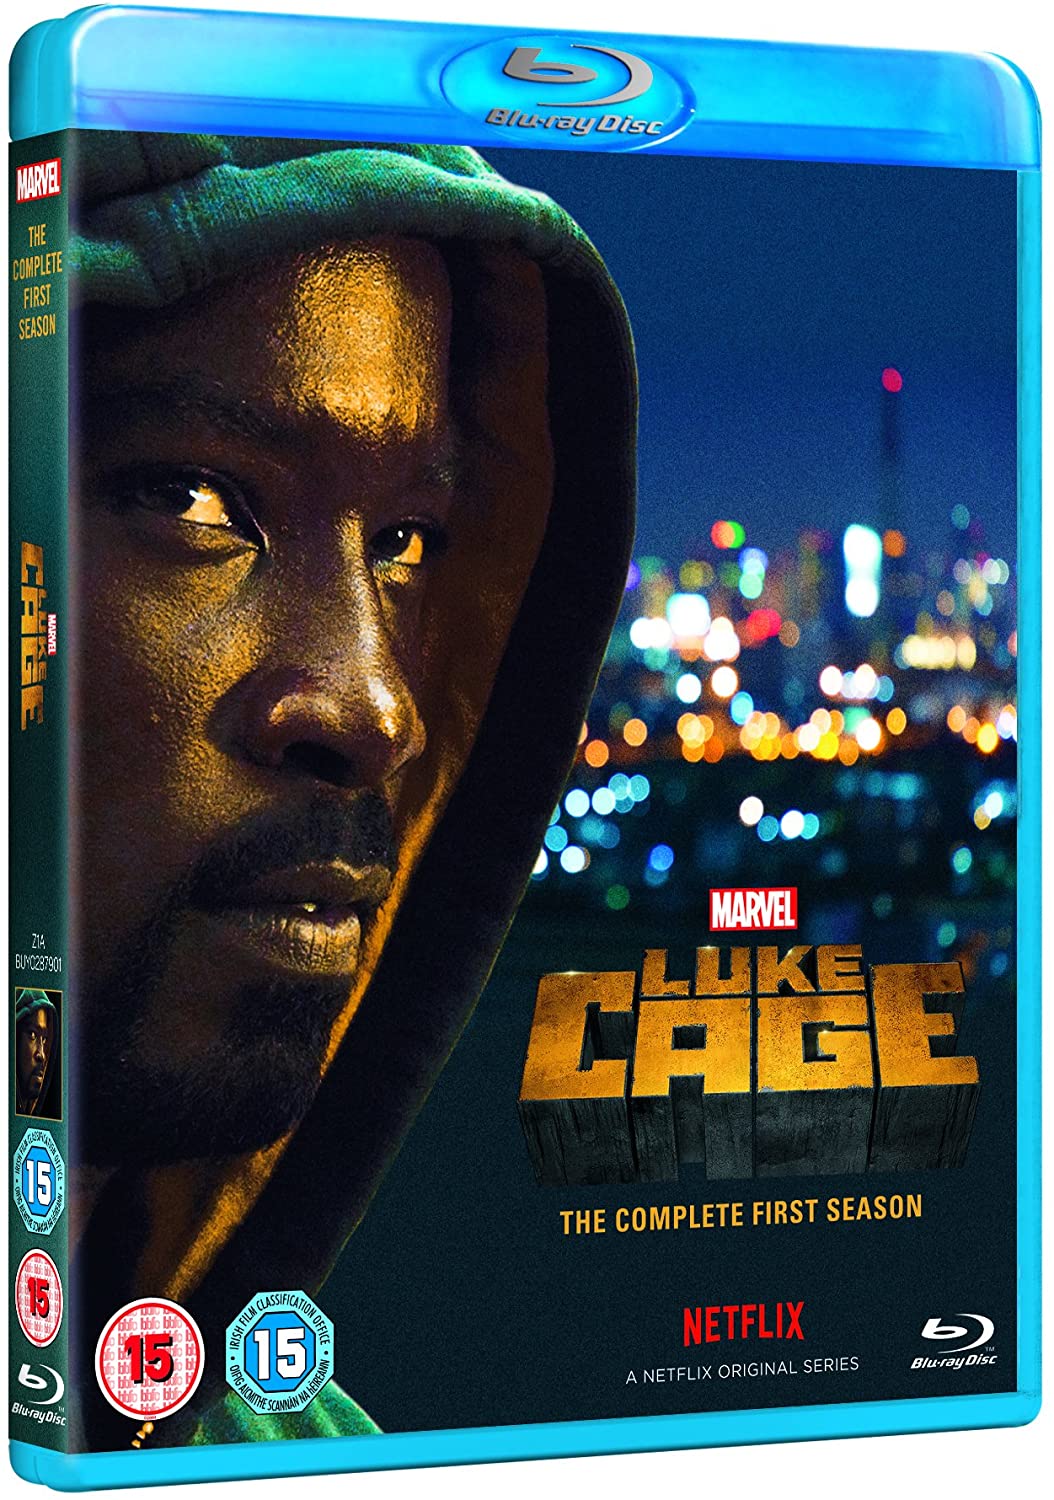 Marvels Luke Cage S1 [Blu-ray]